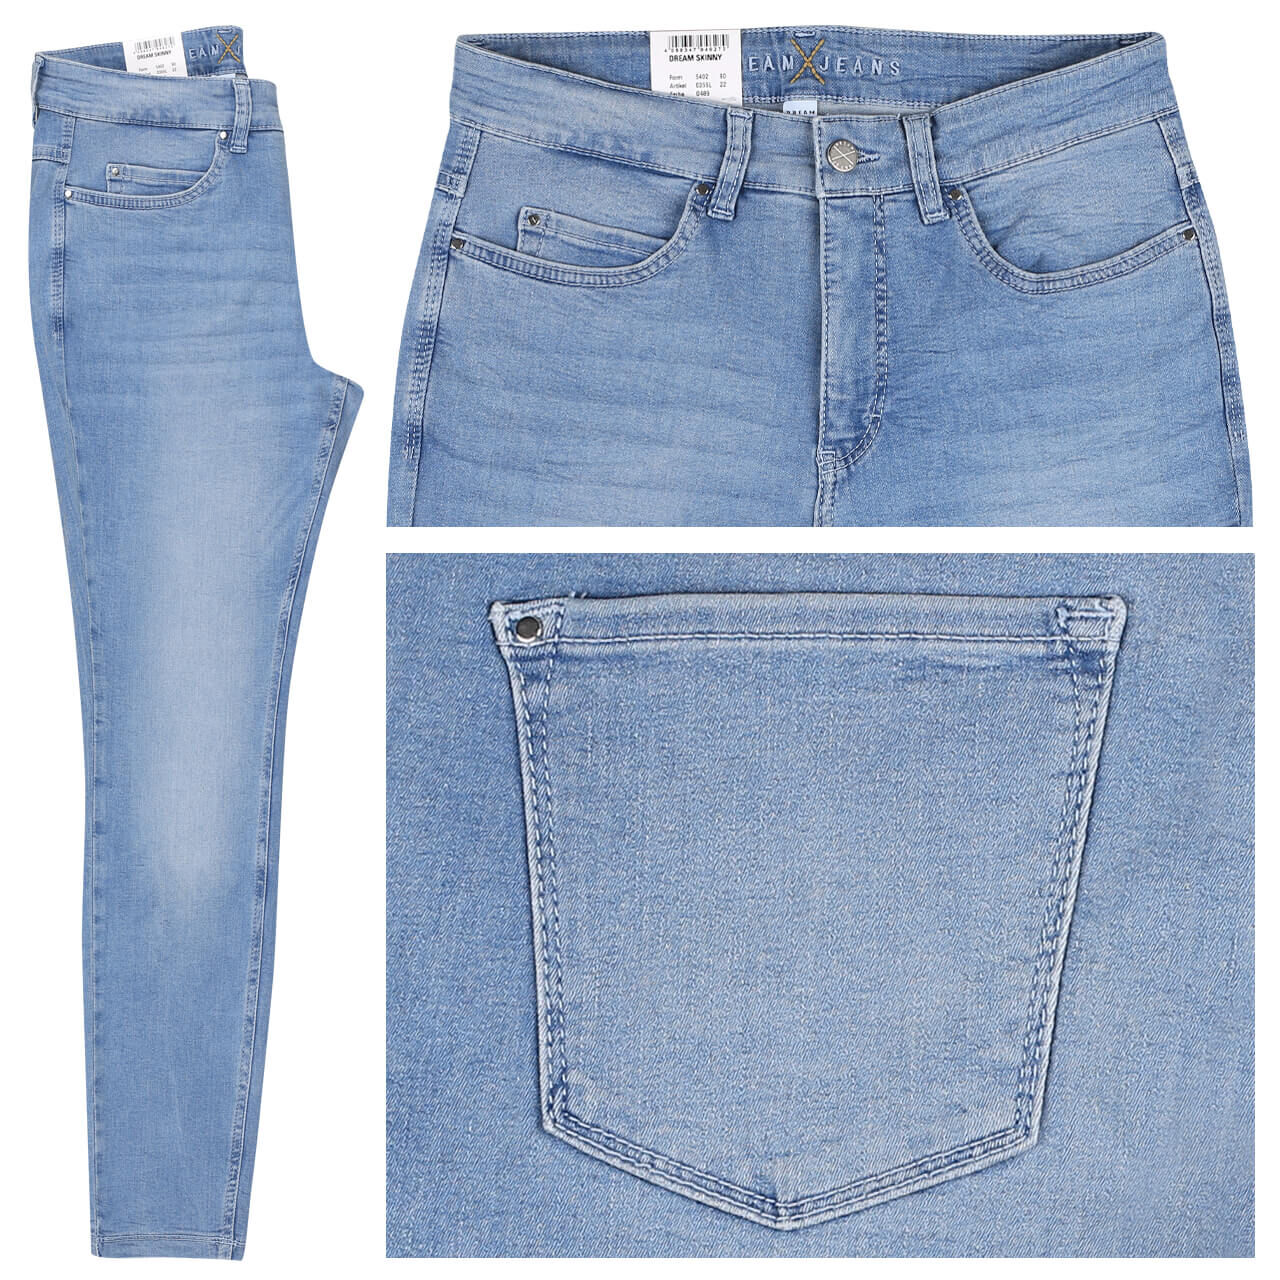 MAC Jeans Dream Skinny für Damen in Himmelblau, FarbNr.: D489